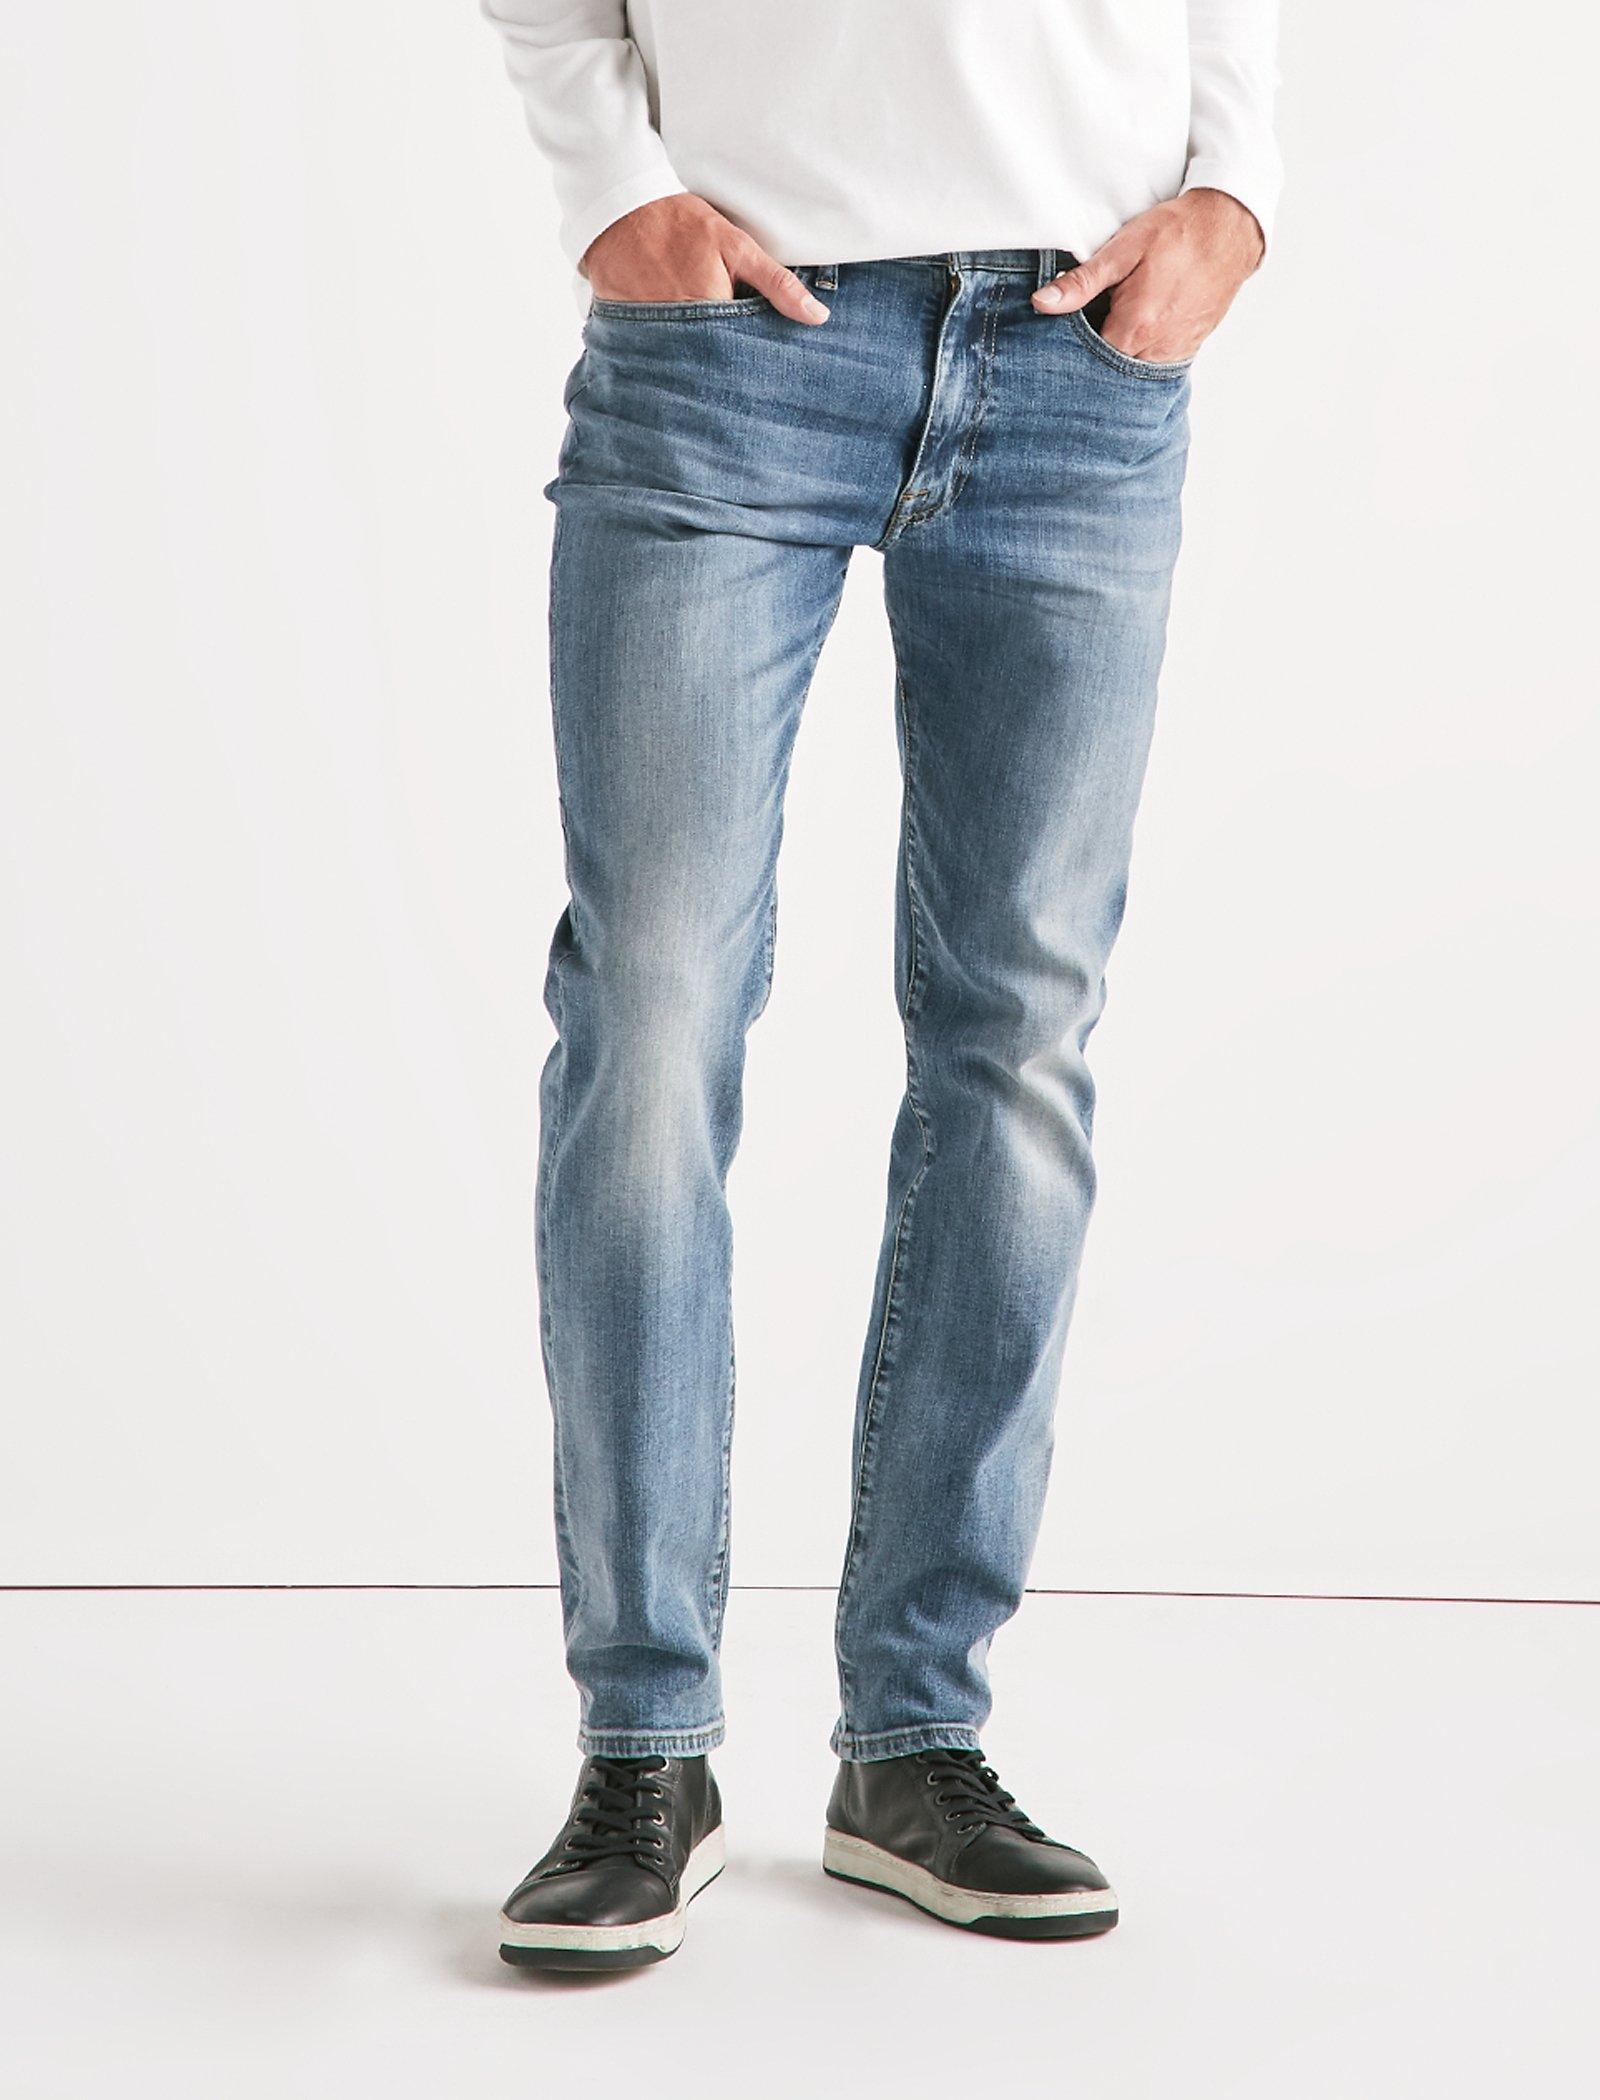 lucky brand jeans 121 heritage slim